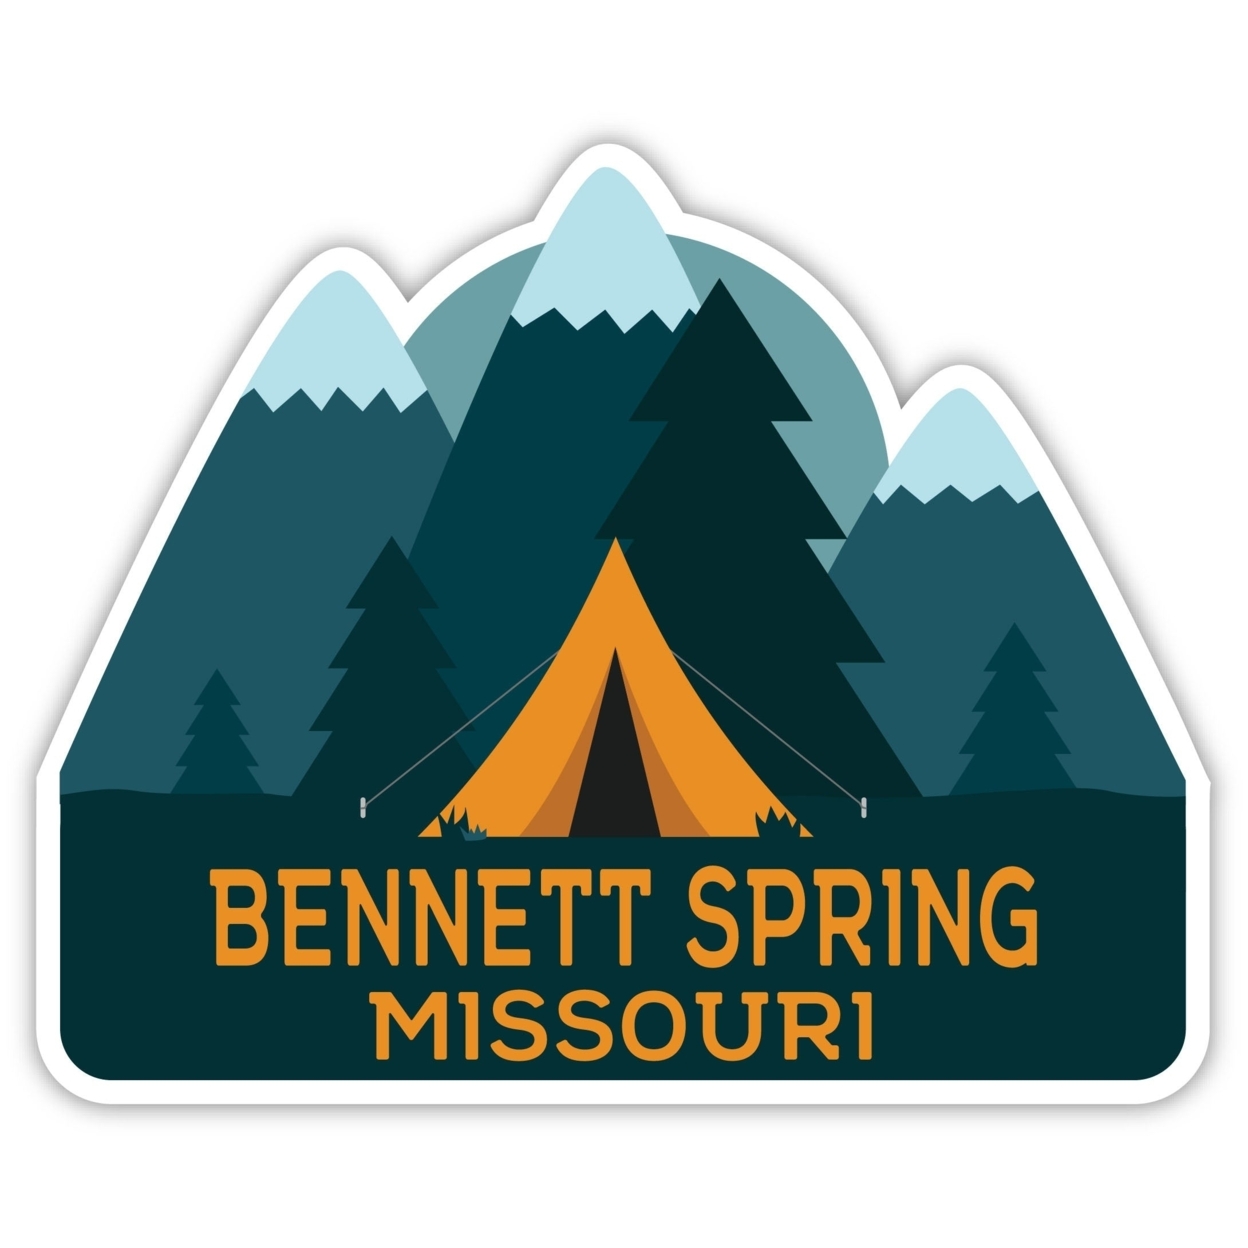 Bennett Spring Missouri Souvenir Decorative Stickers (Choose Theme And Size) - Single Unit, 4-Inch, Tent